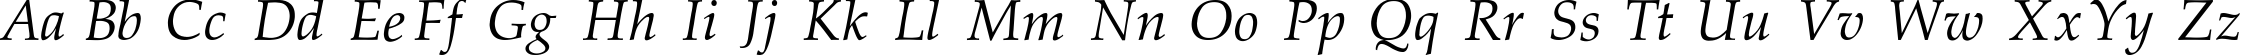 Пример написания английского алфавита шрифтом Palatino-Normal-Italic